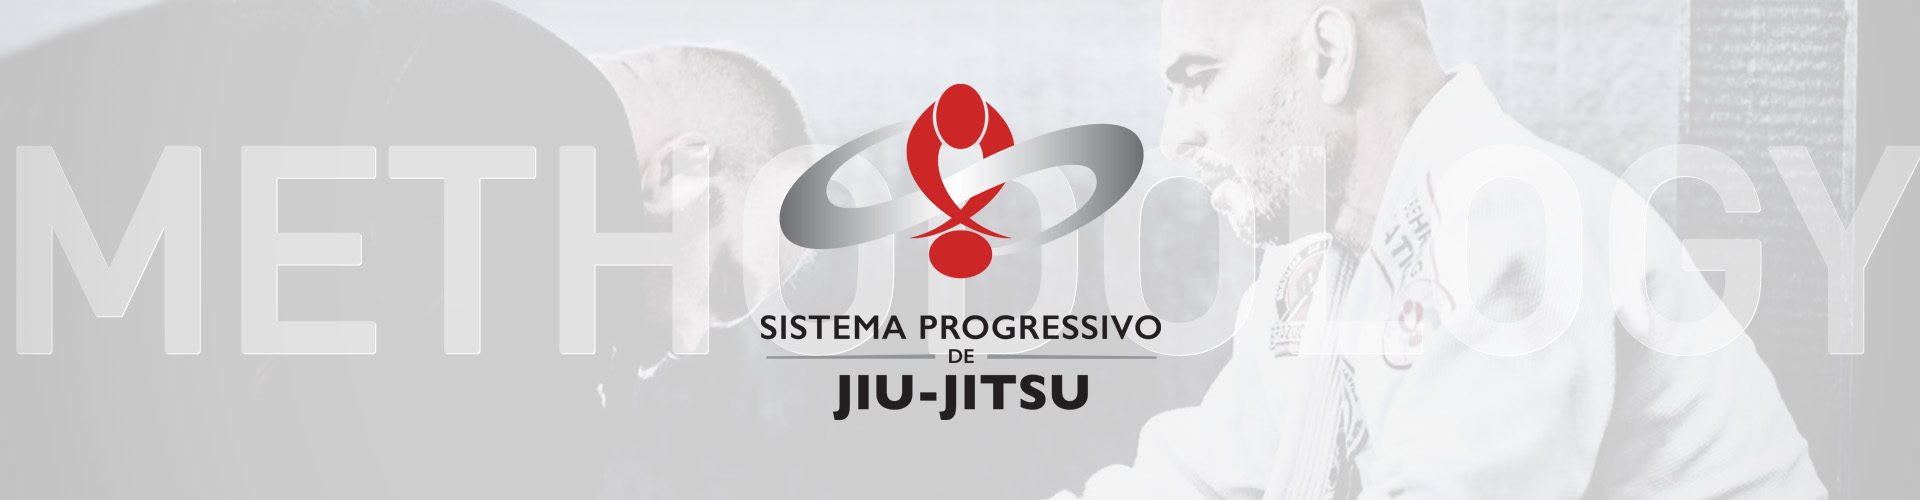 Progressive System of Jiu-Jitsu Sylvio Behring Association